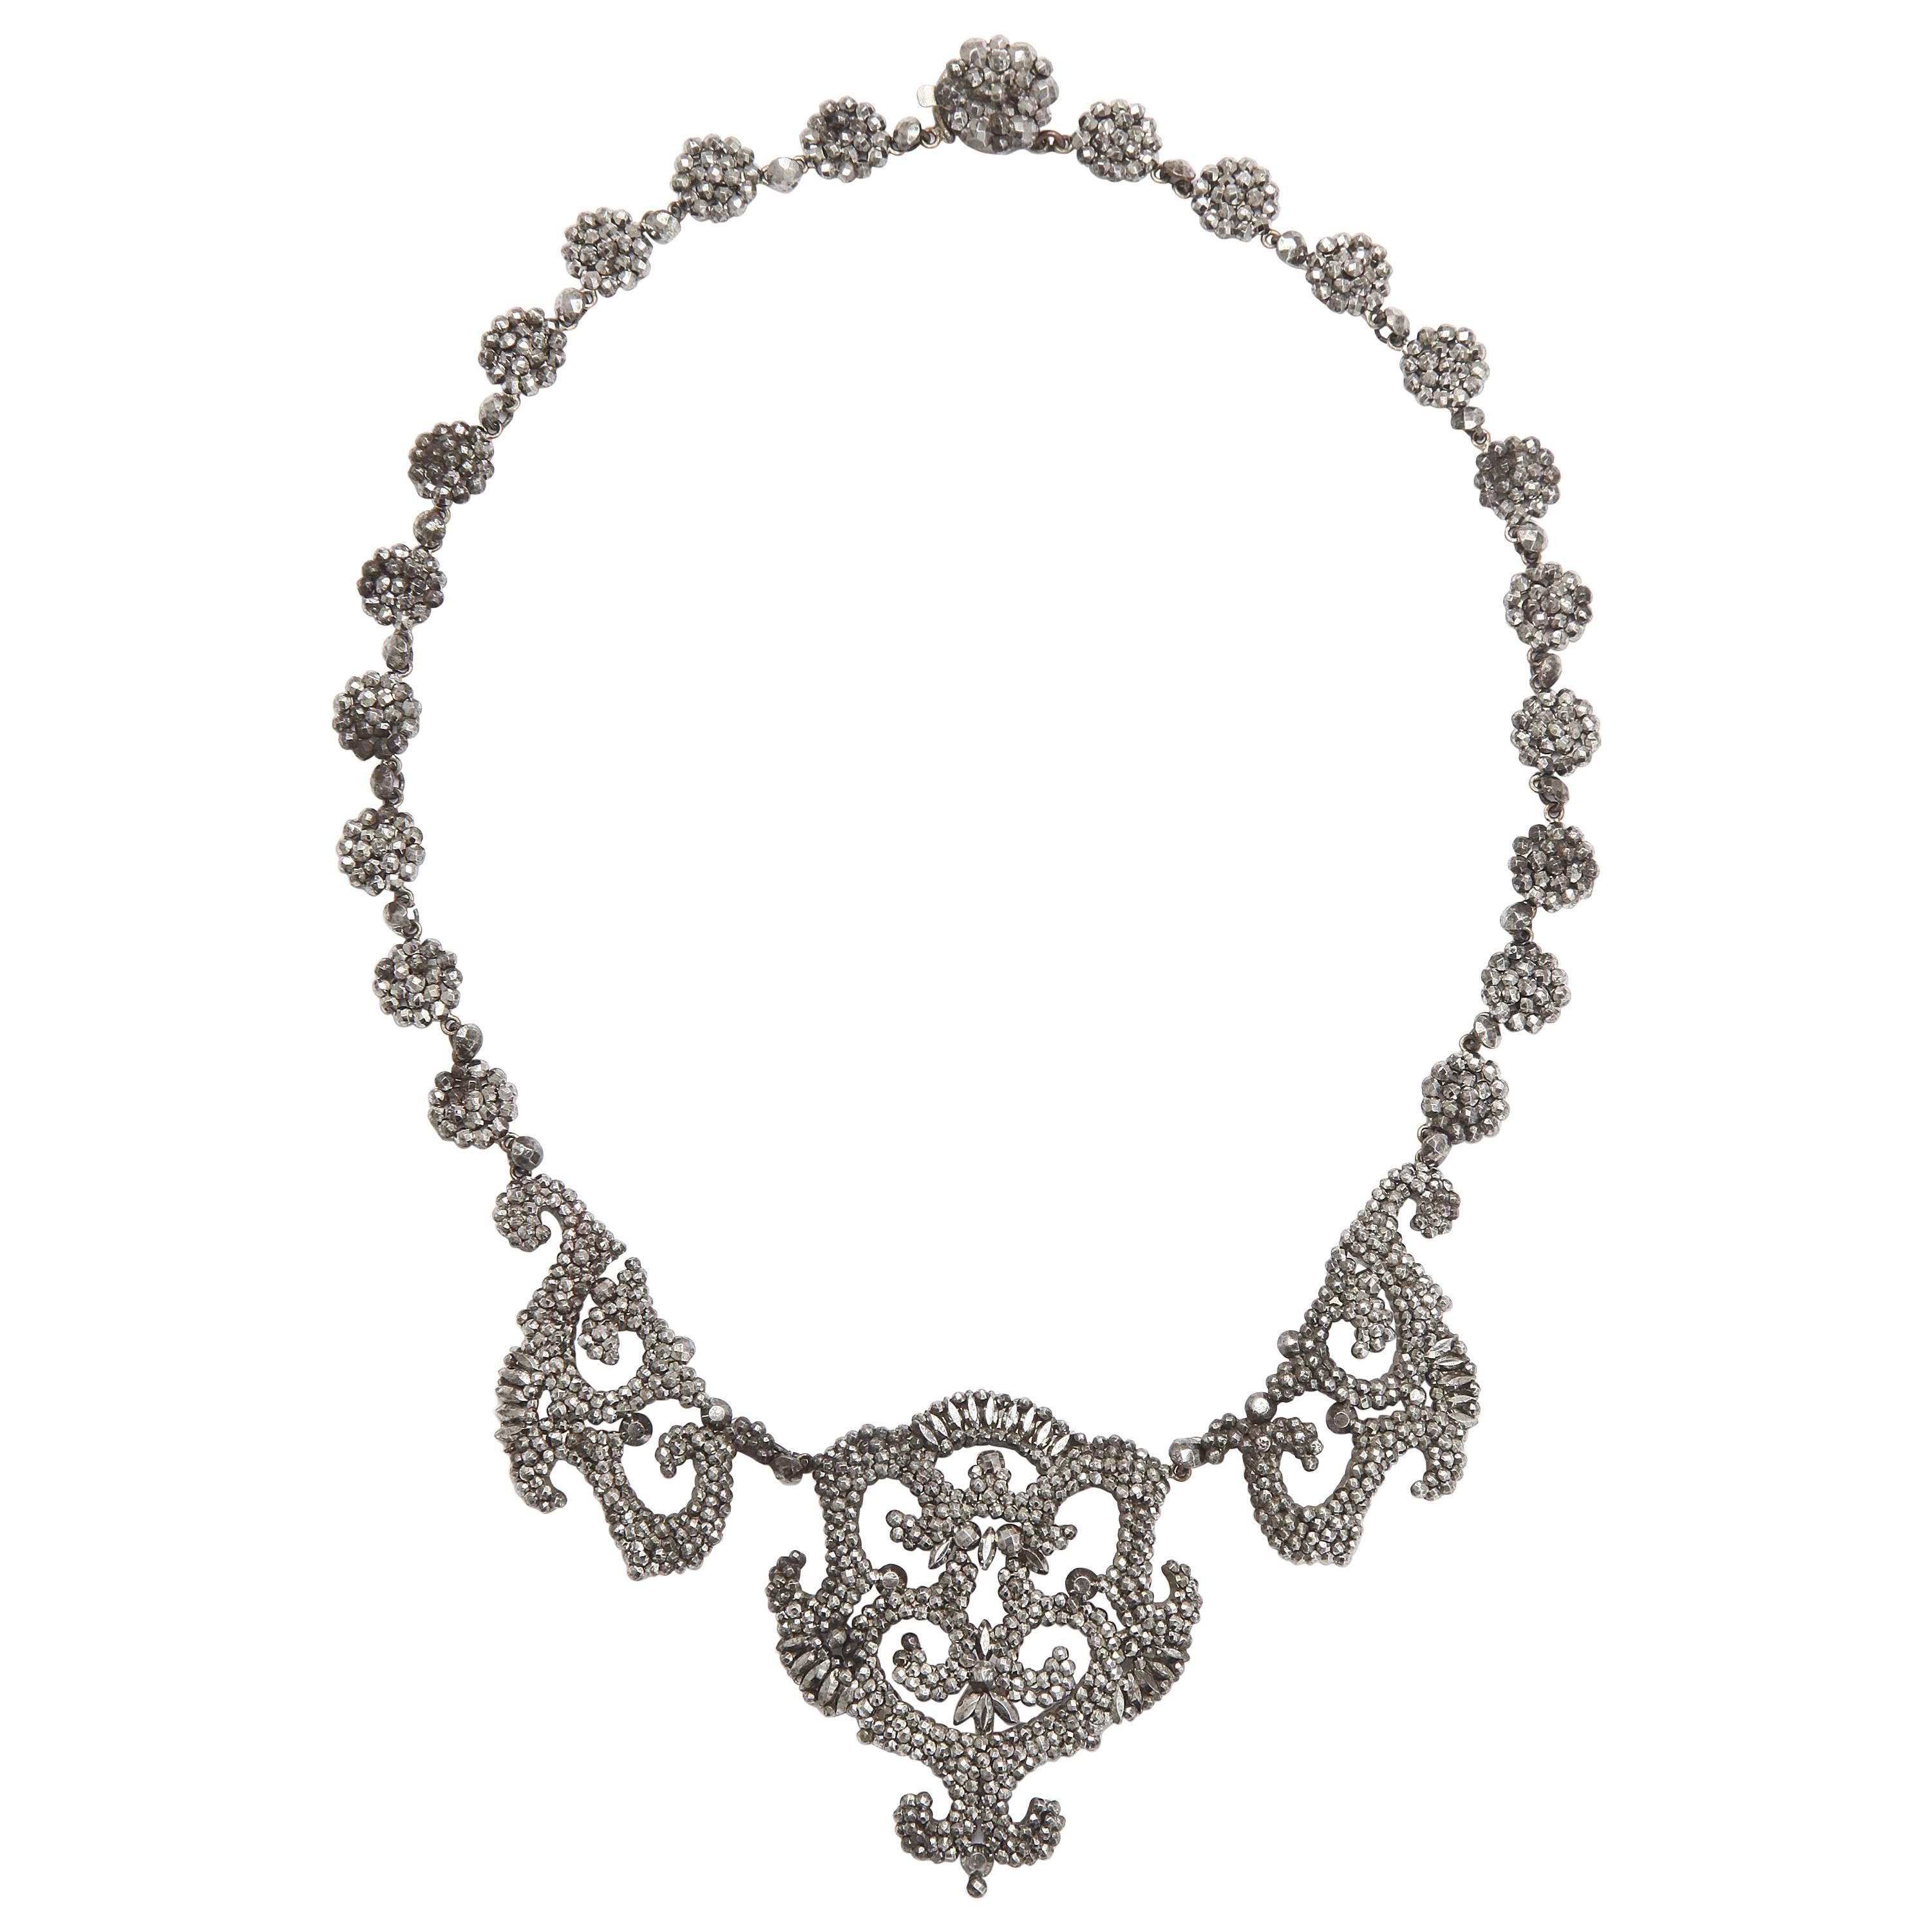 Antique Georgian1820s Early Cut Steel Necklace 